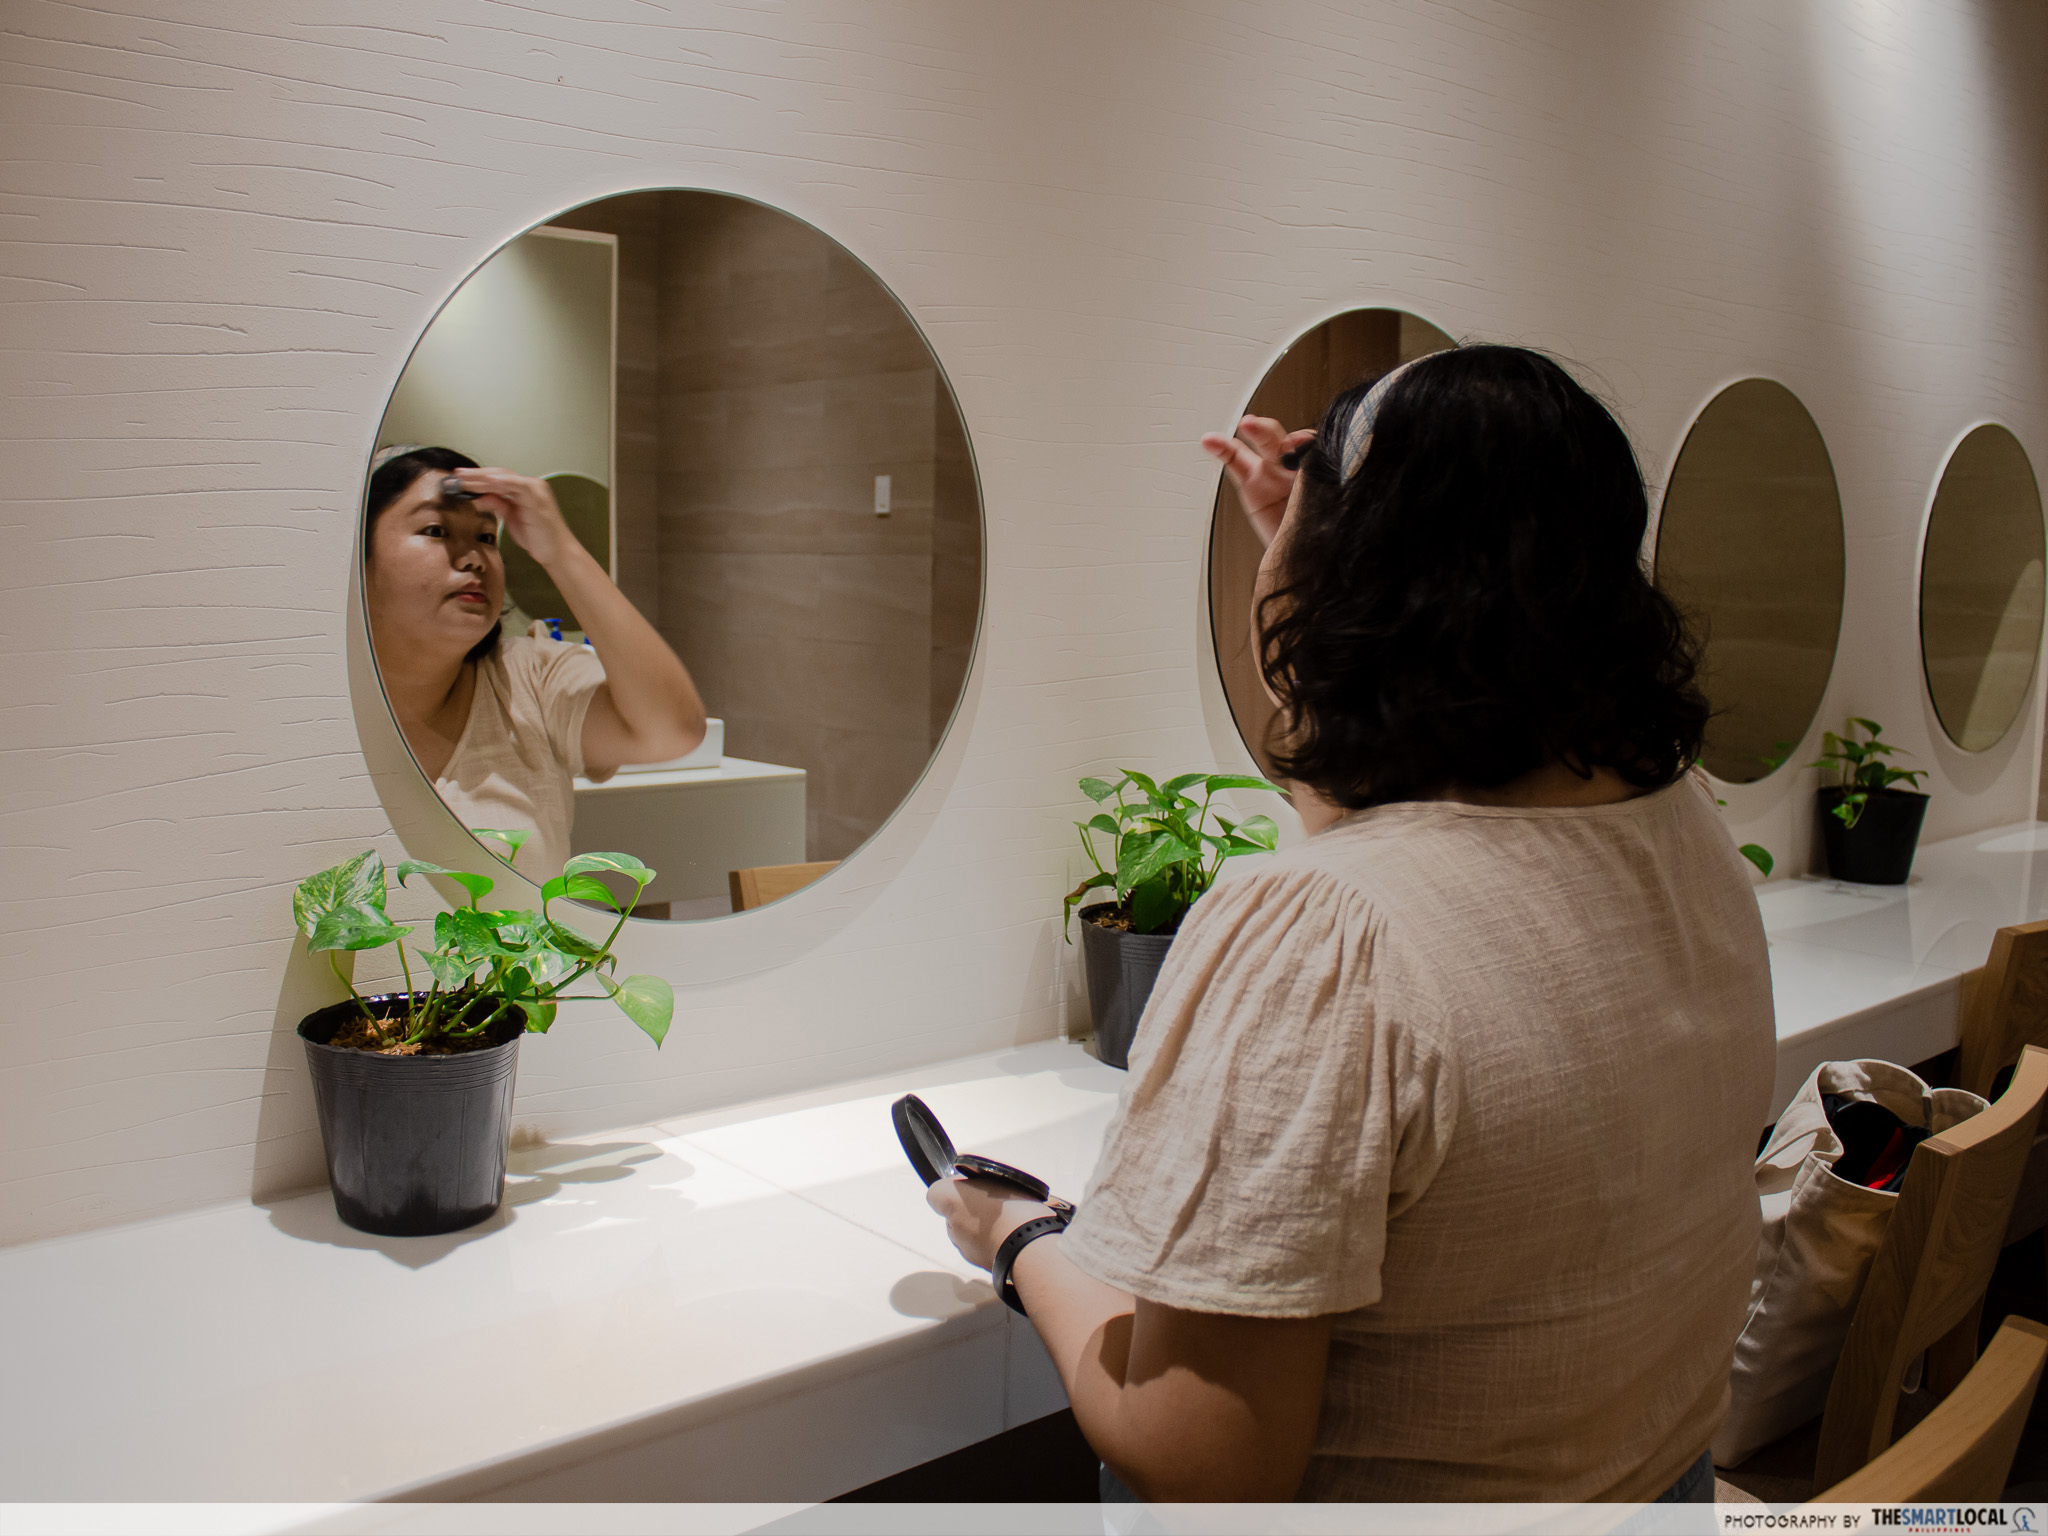 Mitsukoshi Mall - vanities in the ladies room